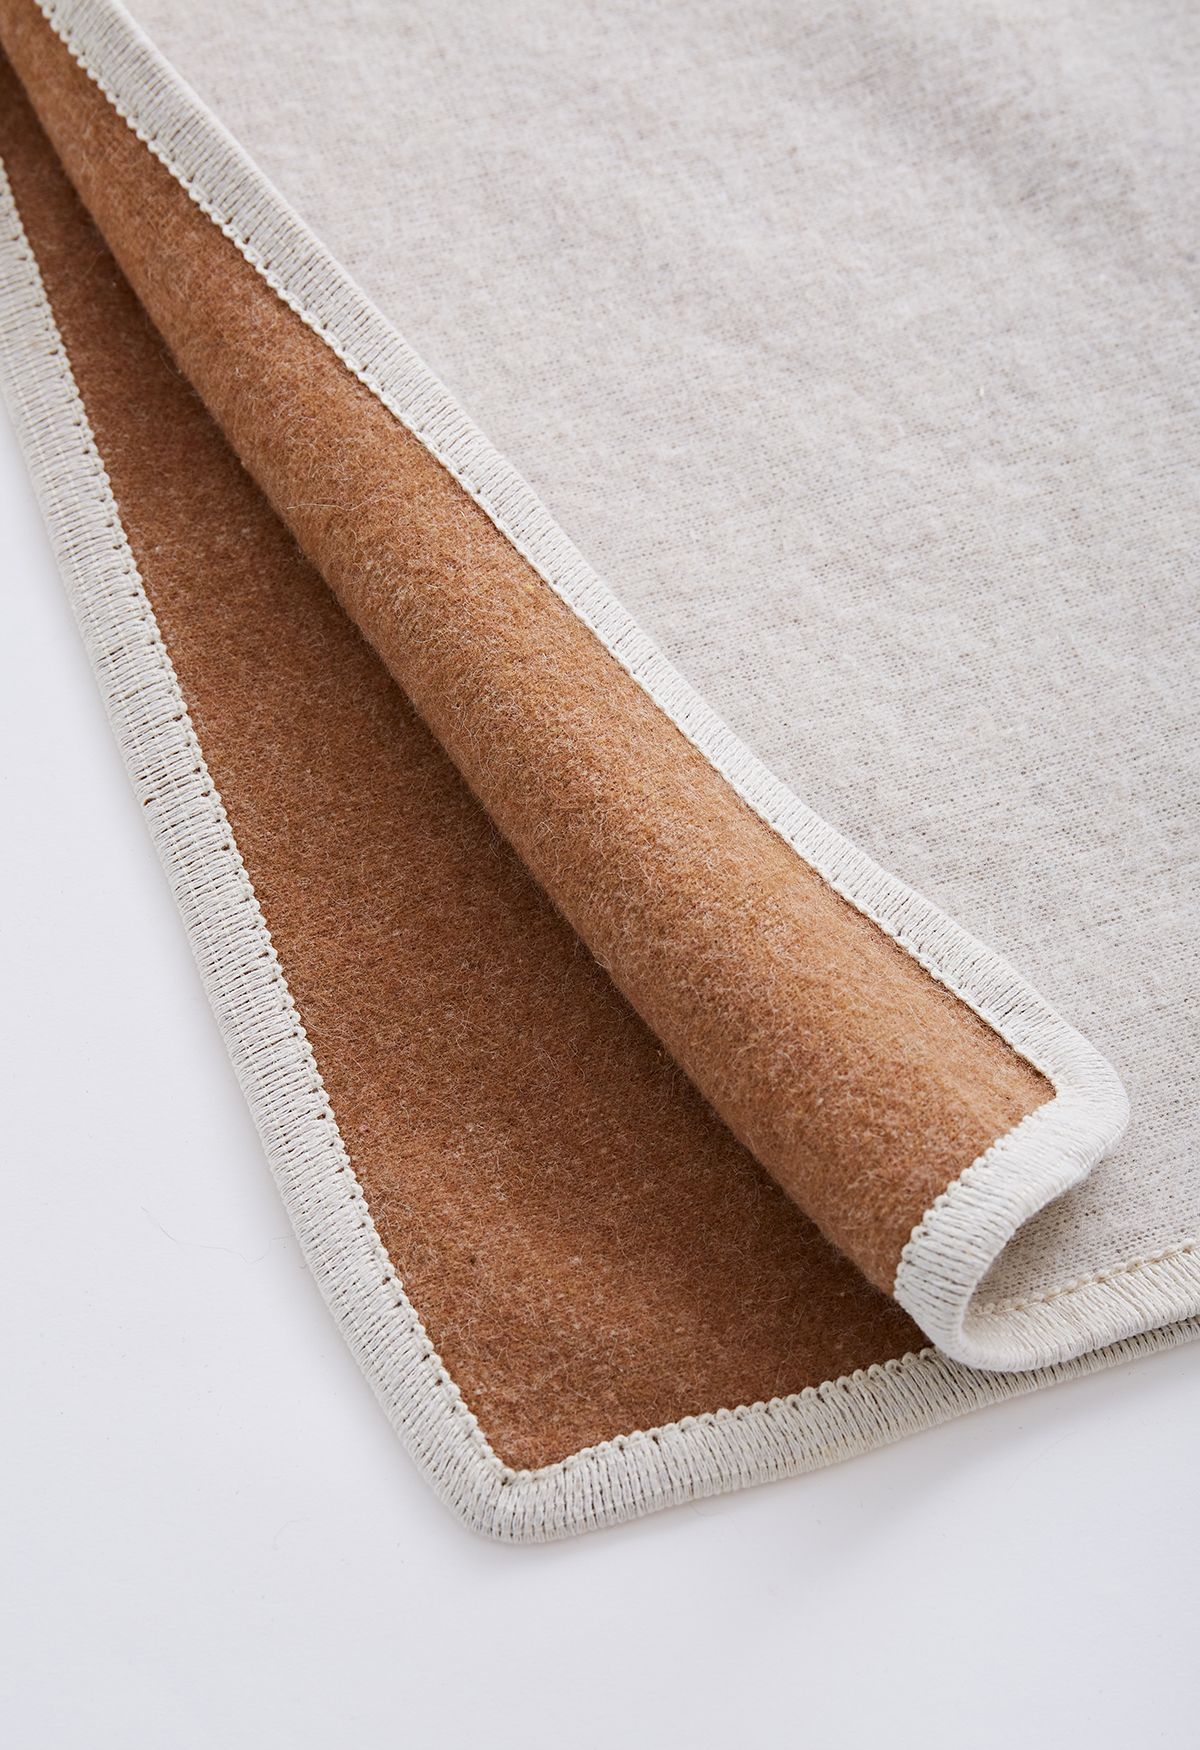 Poncho con capucha de piel sintética de mezcla de lana en tostado claro